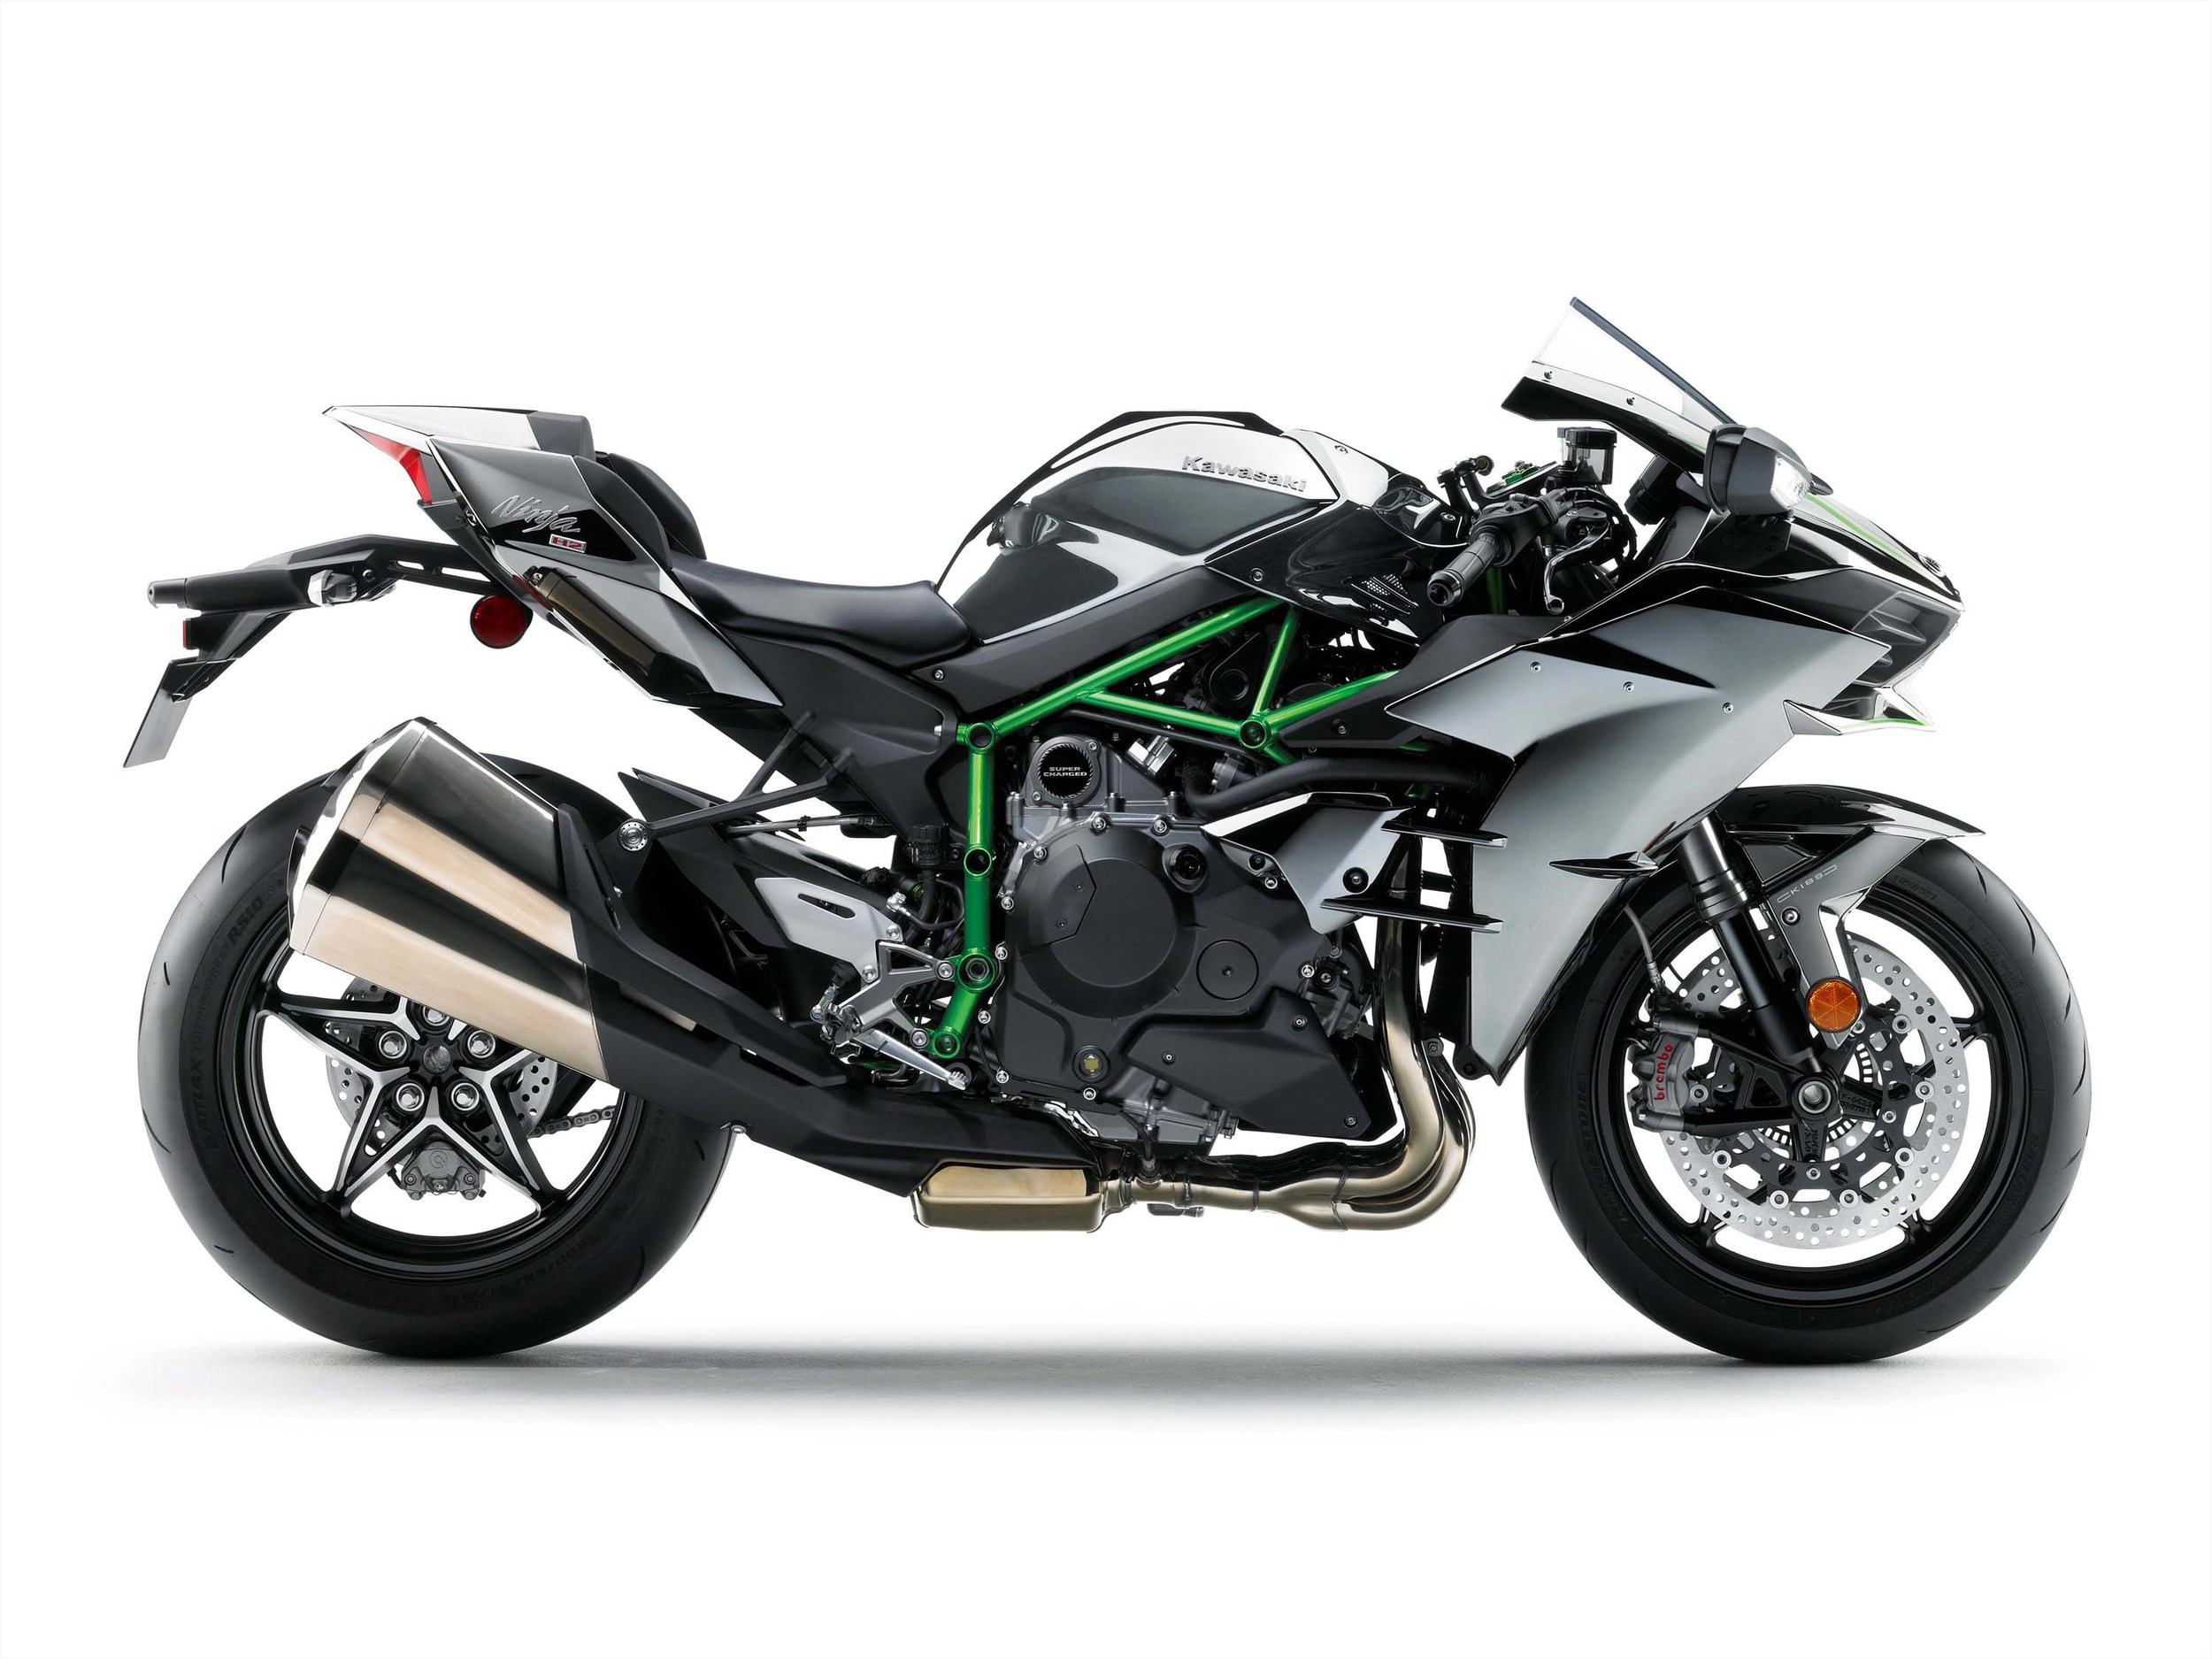 Pit Bull Kawasaki Ninja H2/H2R Hybrid One Armed Motorcycle Rear Stand -  Sportbike Track Gear